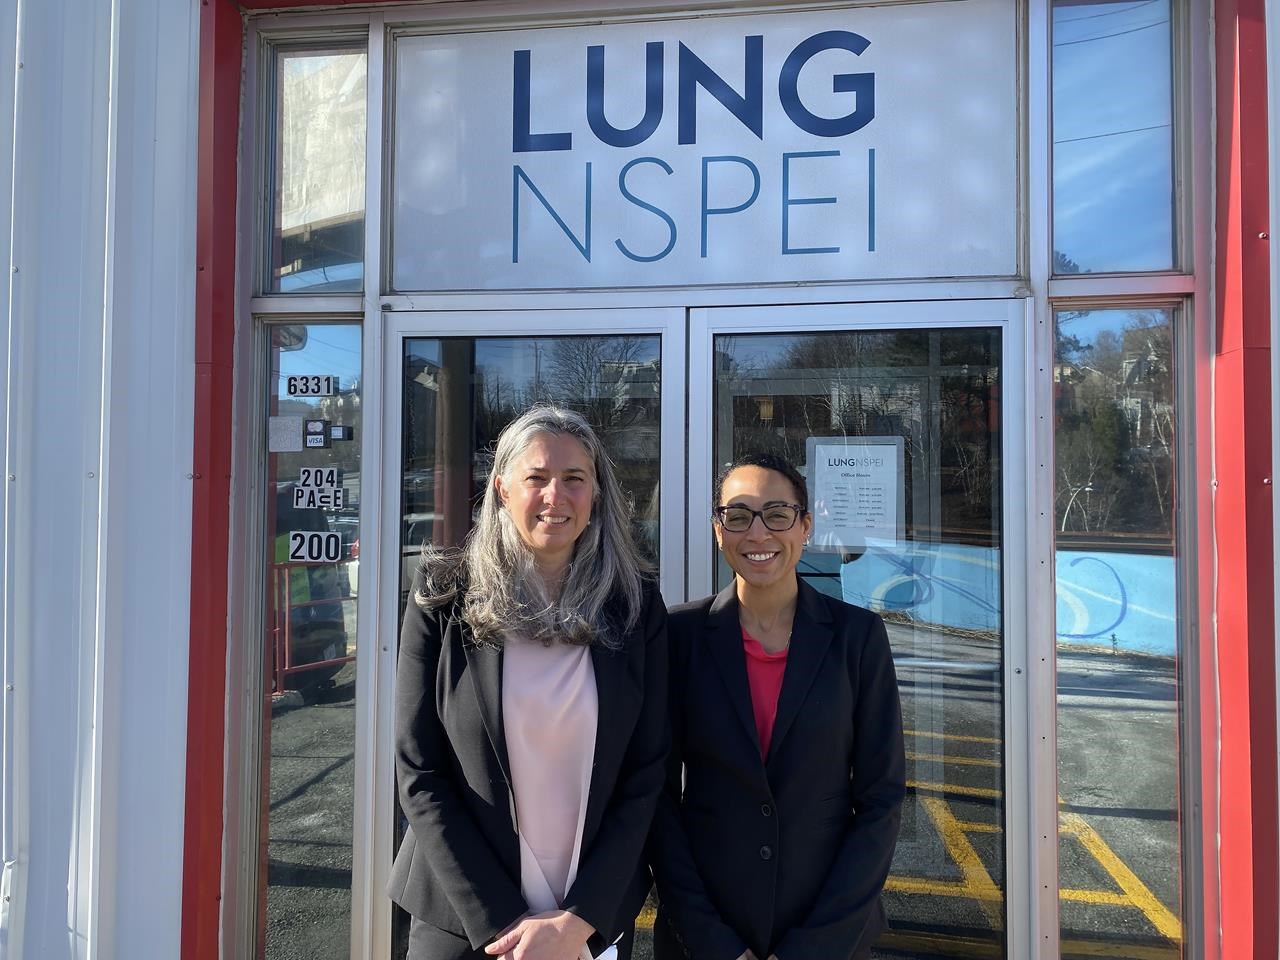 Nova Scotia announces its first screening program for lung cancer